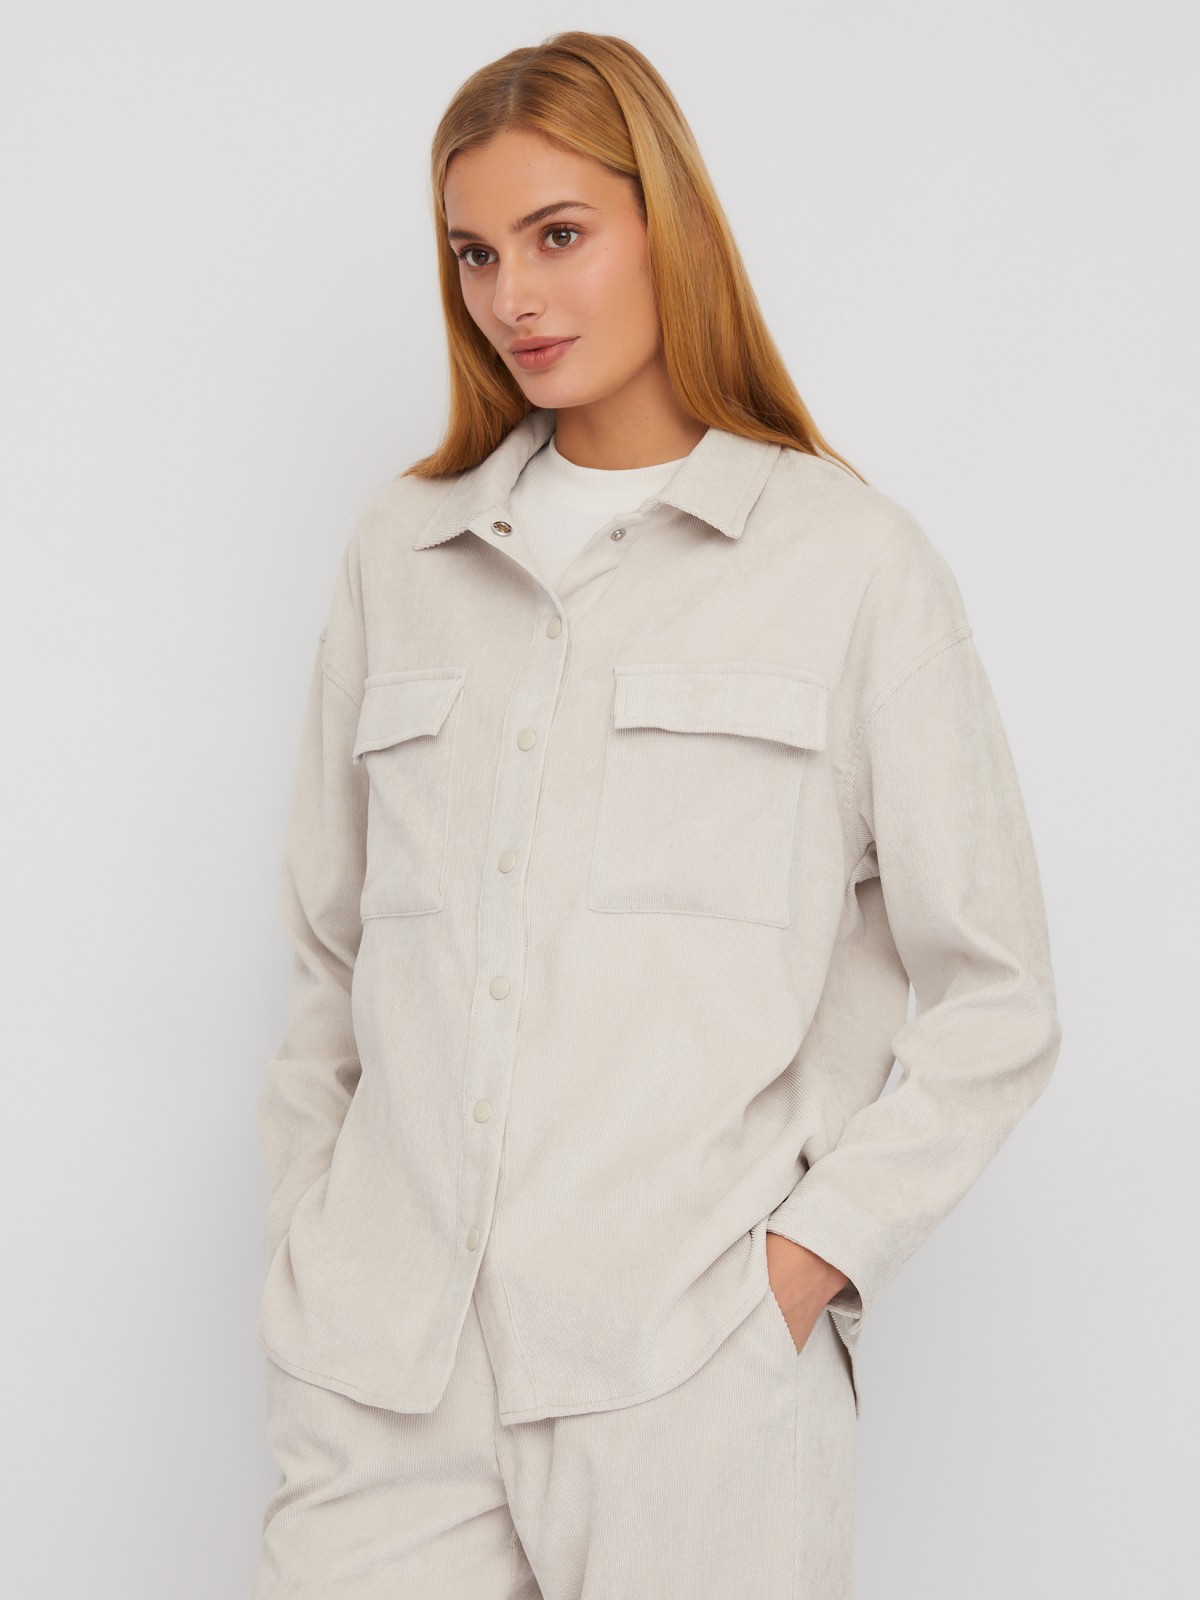 Вельветовая куртка-рубашка свободного силуэта zolla 02411540L023, цвет светло-серый, размер XXS - фото 3